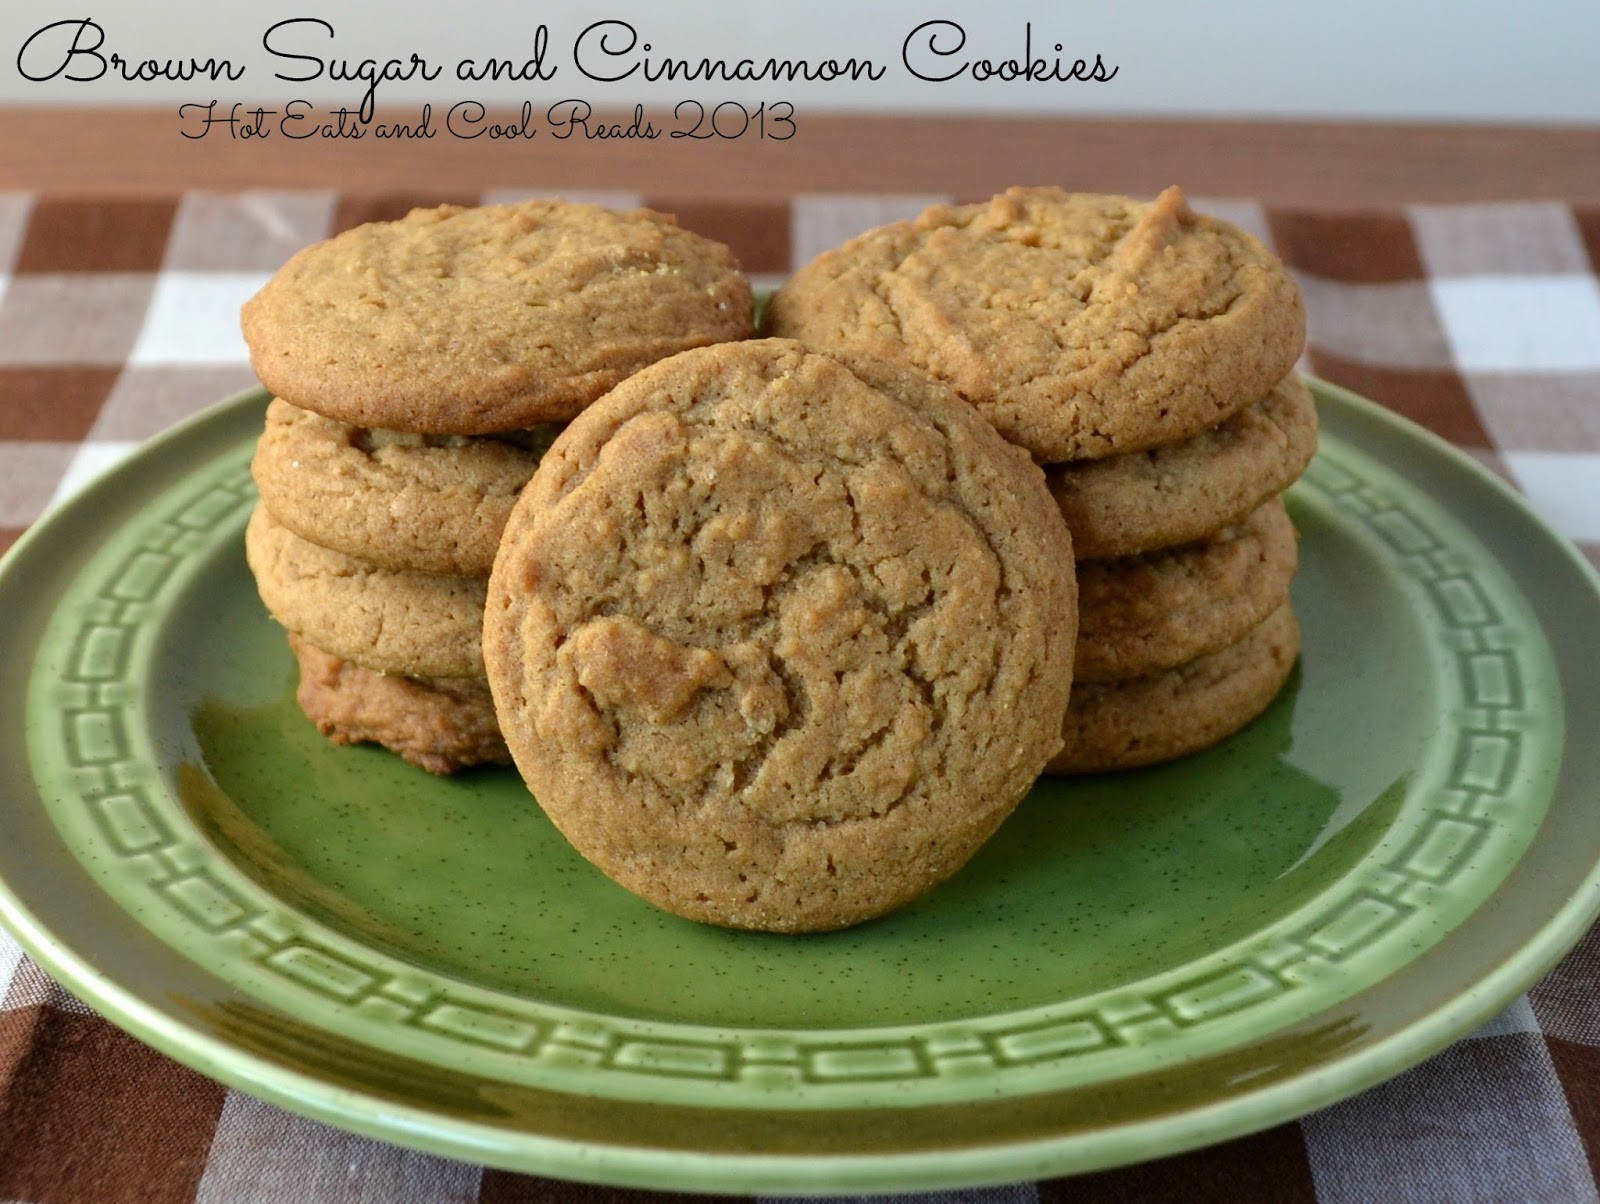 Cinnamon Cookies Recipe
 Hot Eats and Cool Reads Brown Sugar and Cinnamon Cookies